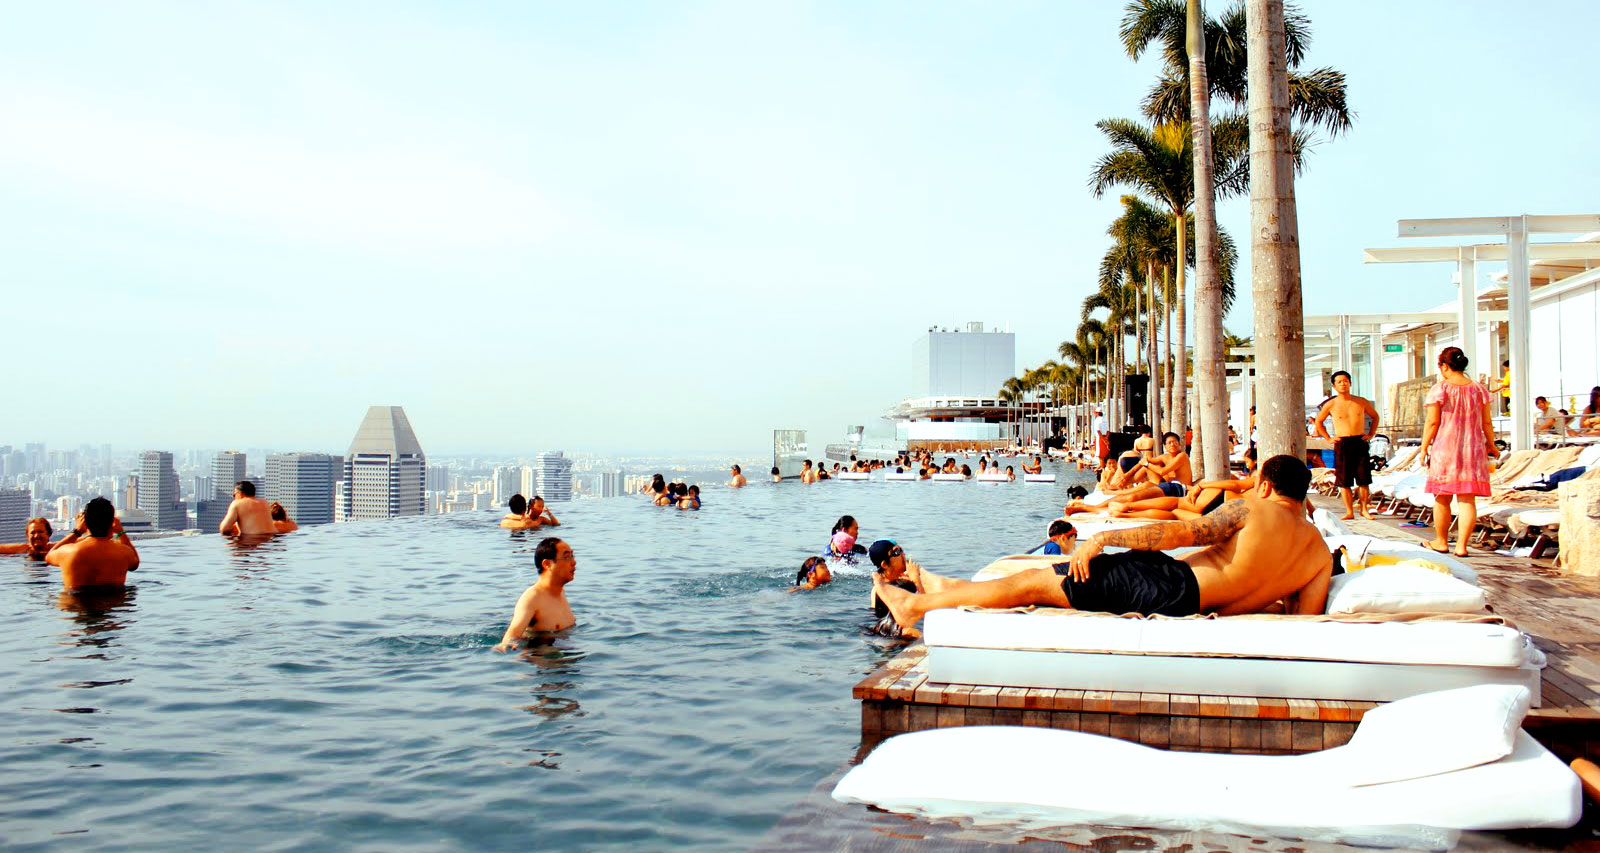 marina-bay-sands-pool-hotel